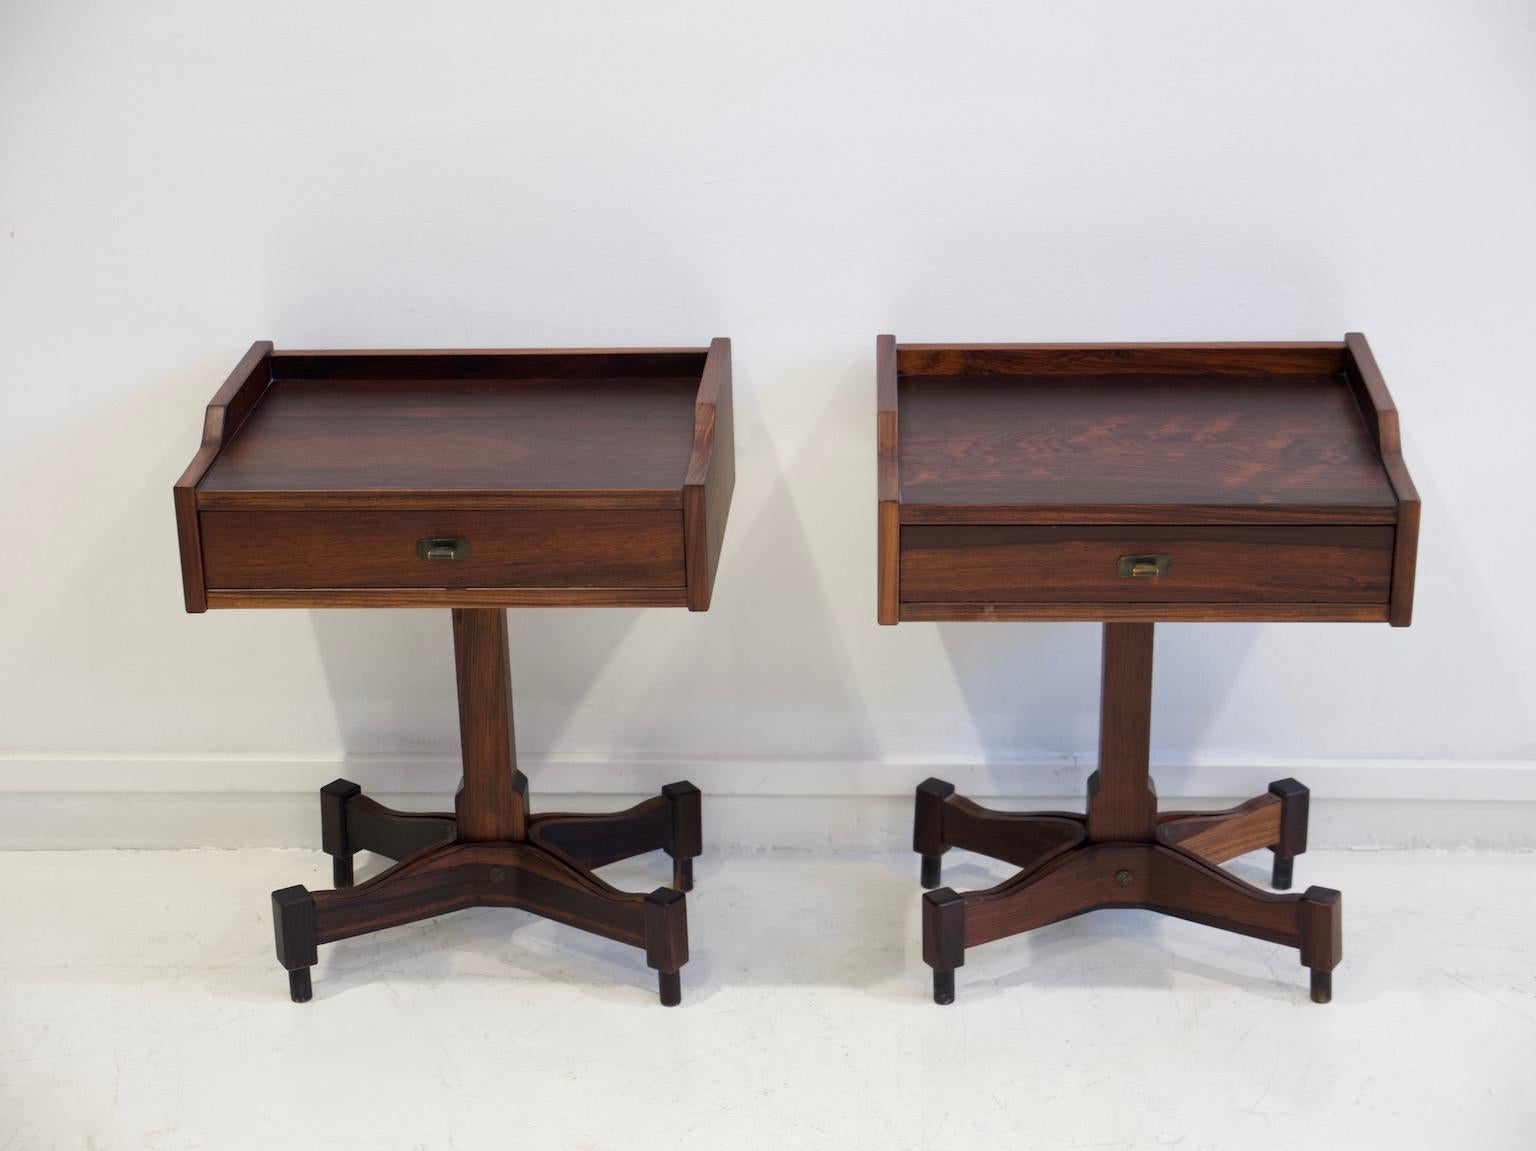 Pair of side tables or nightstands, model 